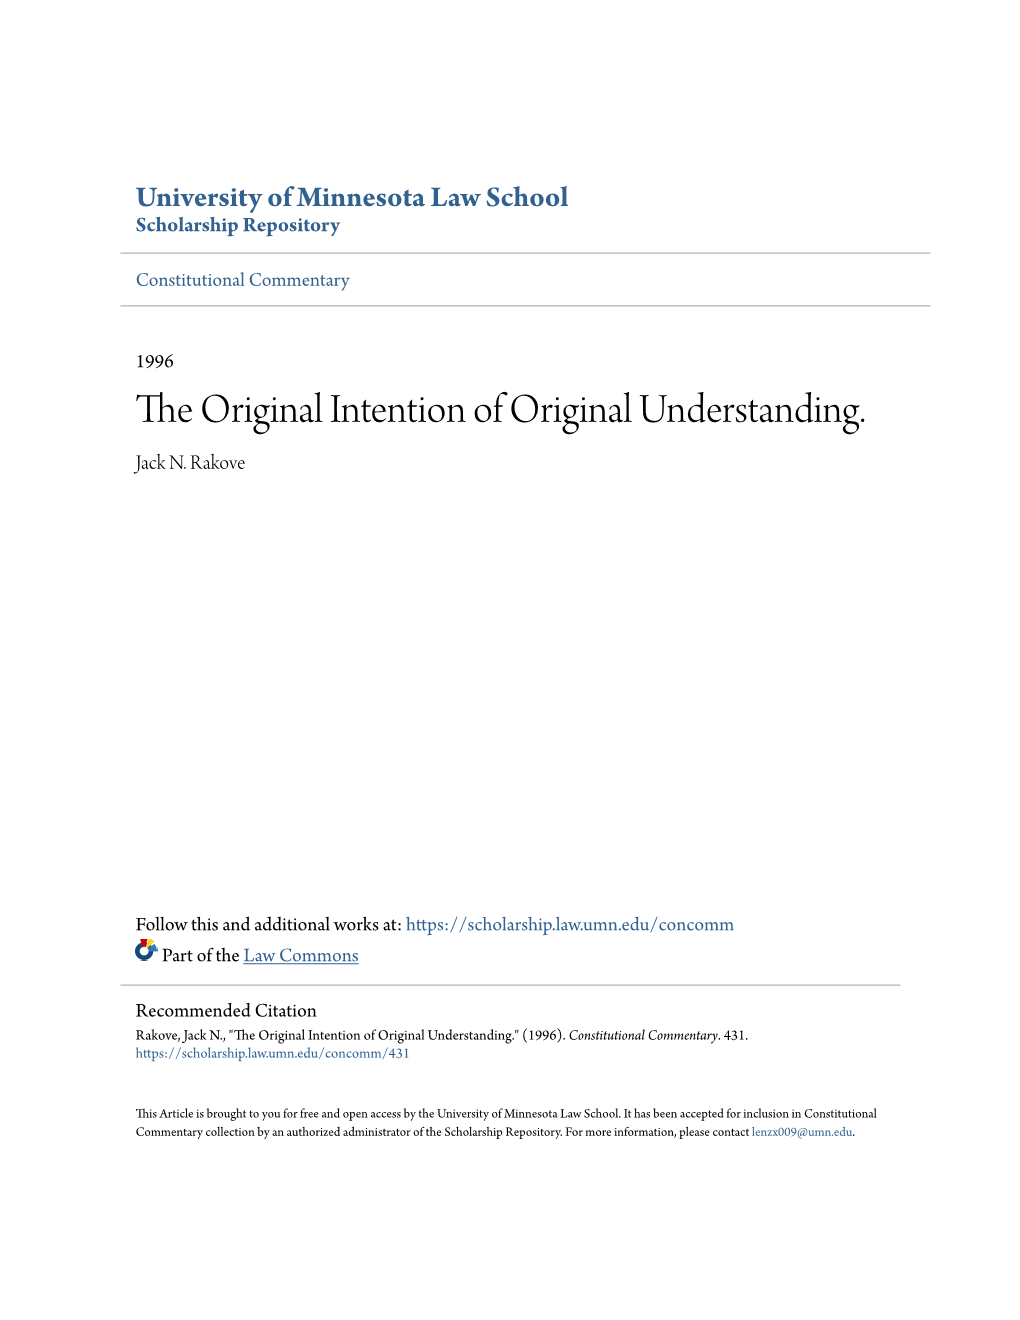 The Original Intention of Original Understanding. Jack N